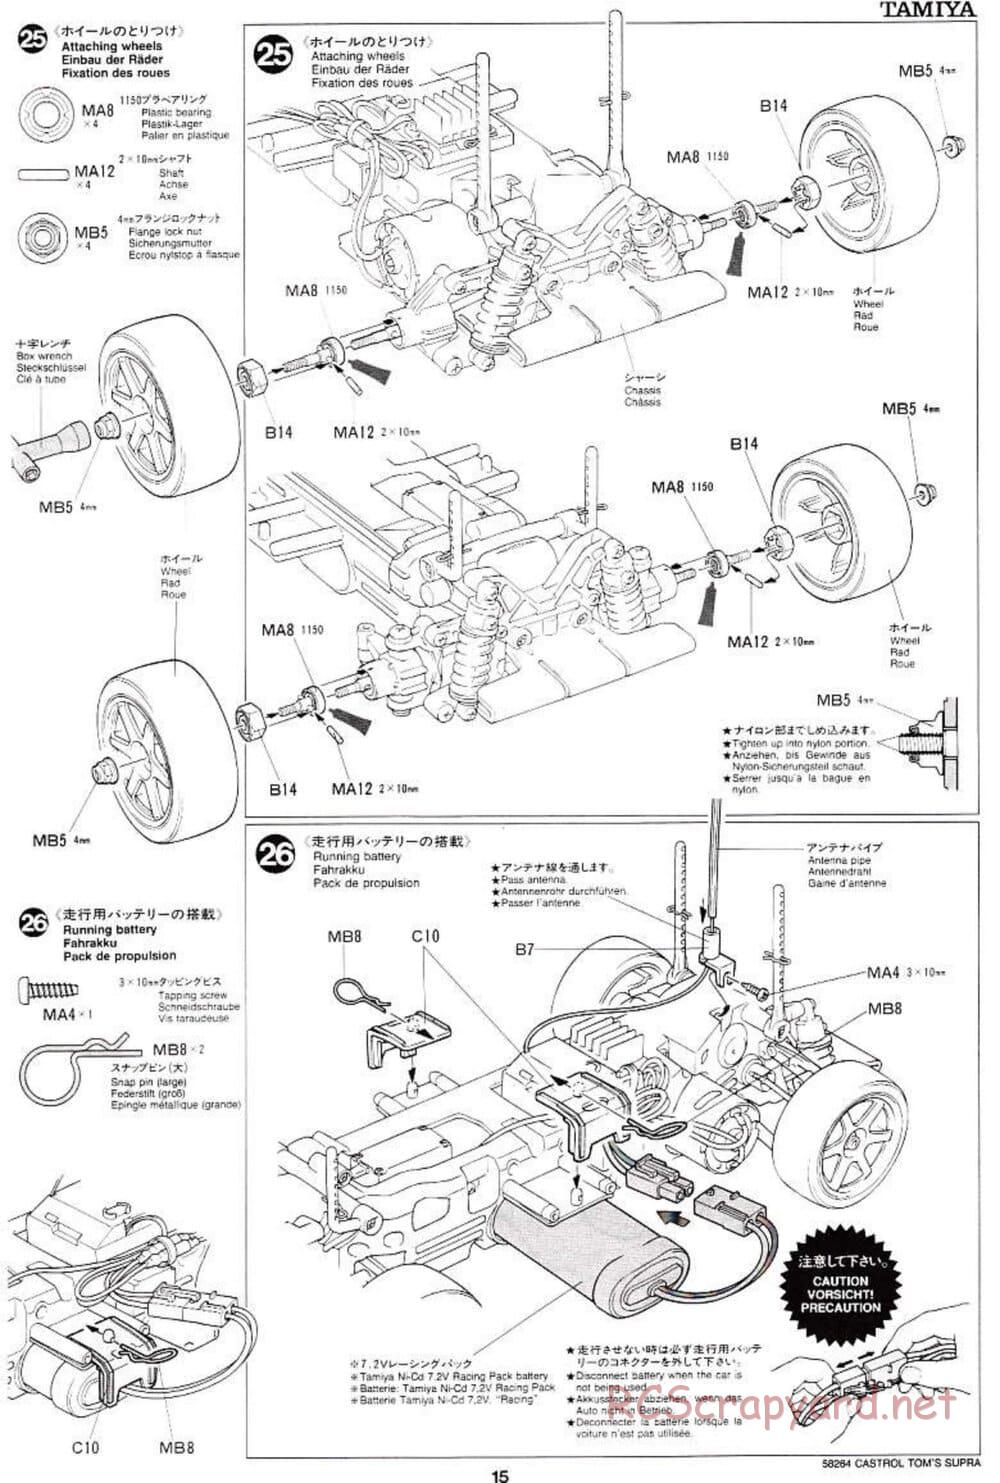 Tamiya - Castrol Tom's Supra 2000 - TL-01 Chassis - Manual - Page 15